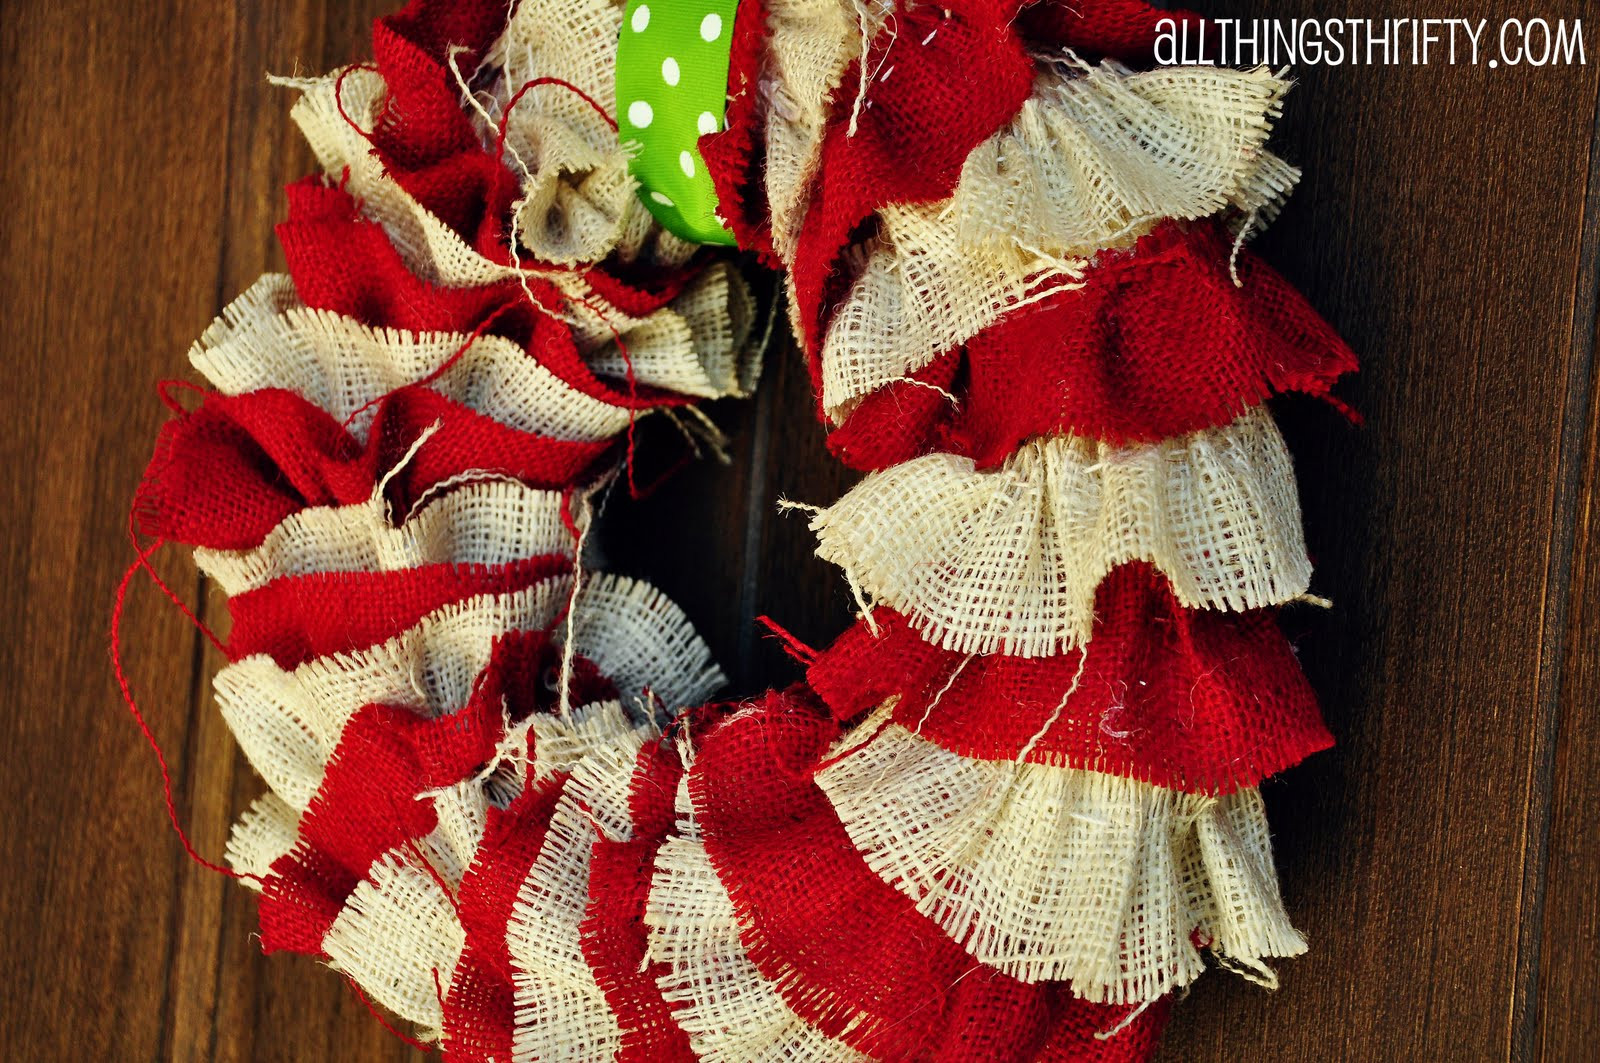 Best ideas about DIY Christmas Wreaths
. Save or Pin Tutorial DIY Christmas Wreath Now.